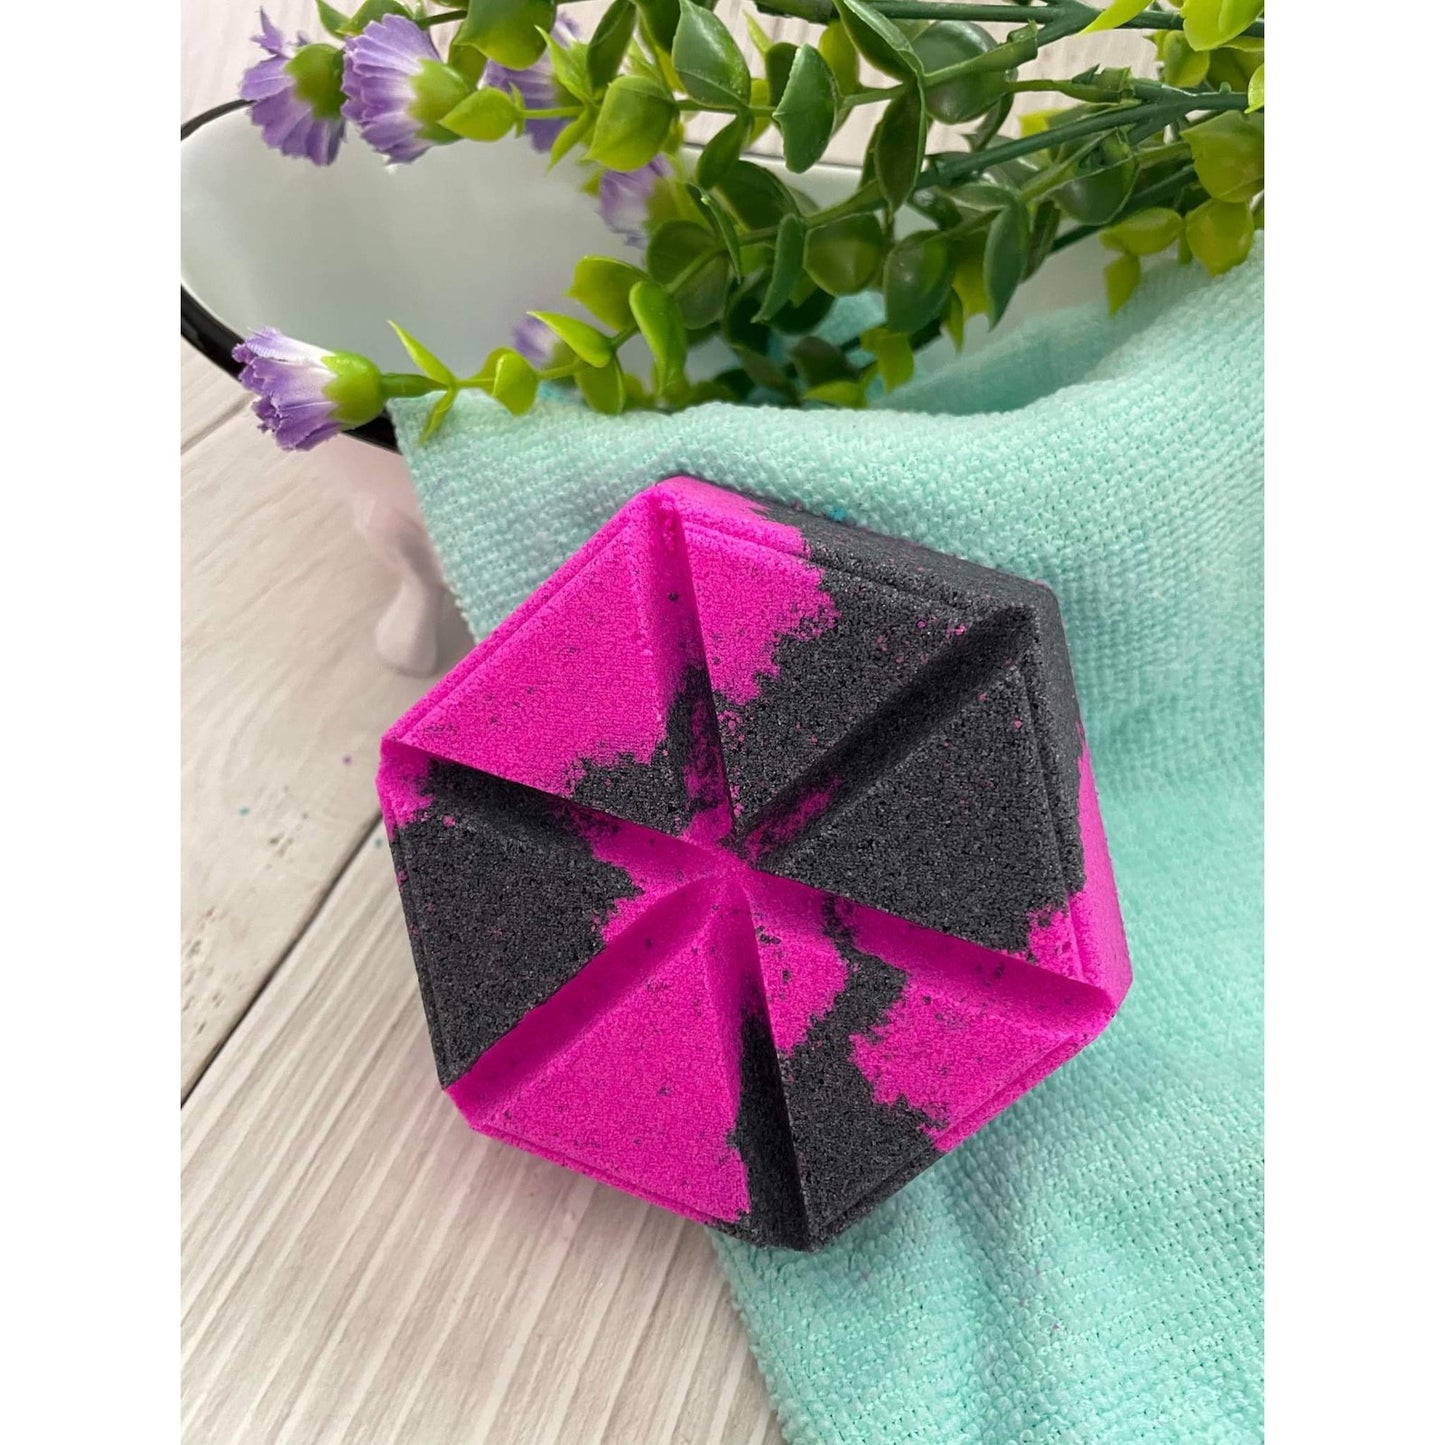 Hexagon Snap Apart Hybrid Mold